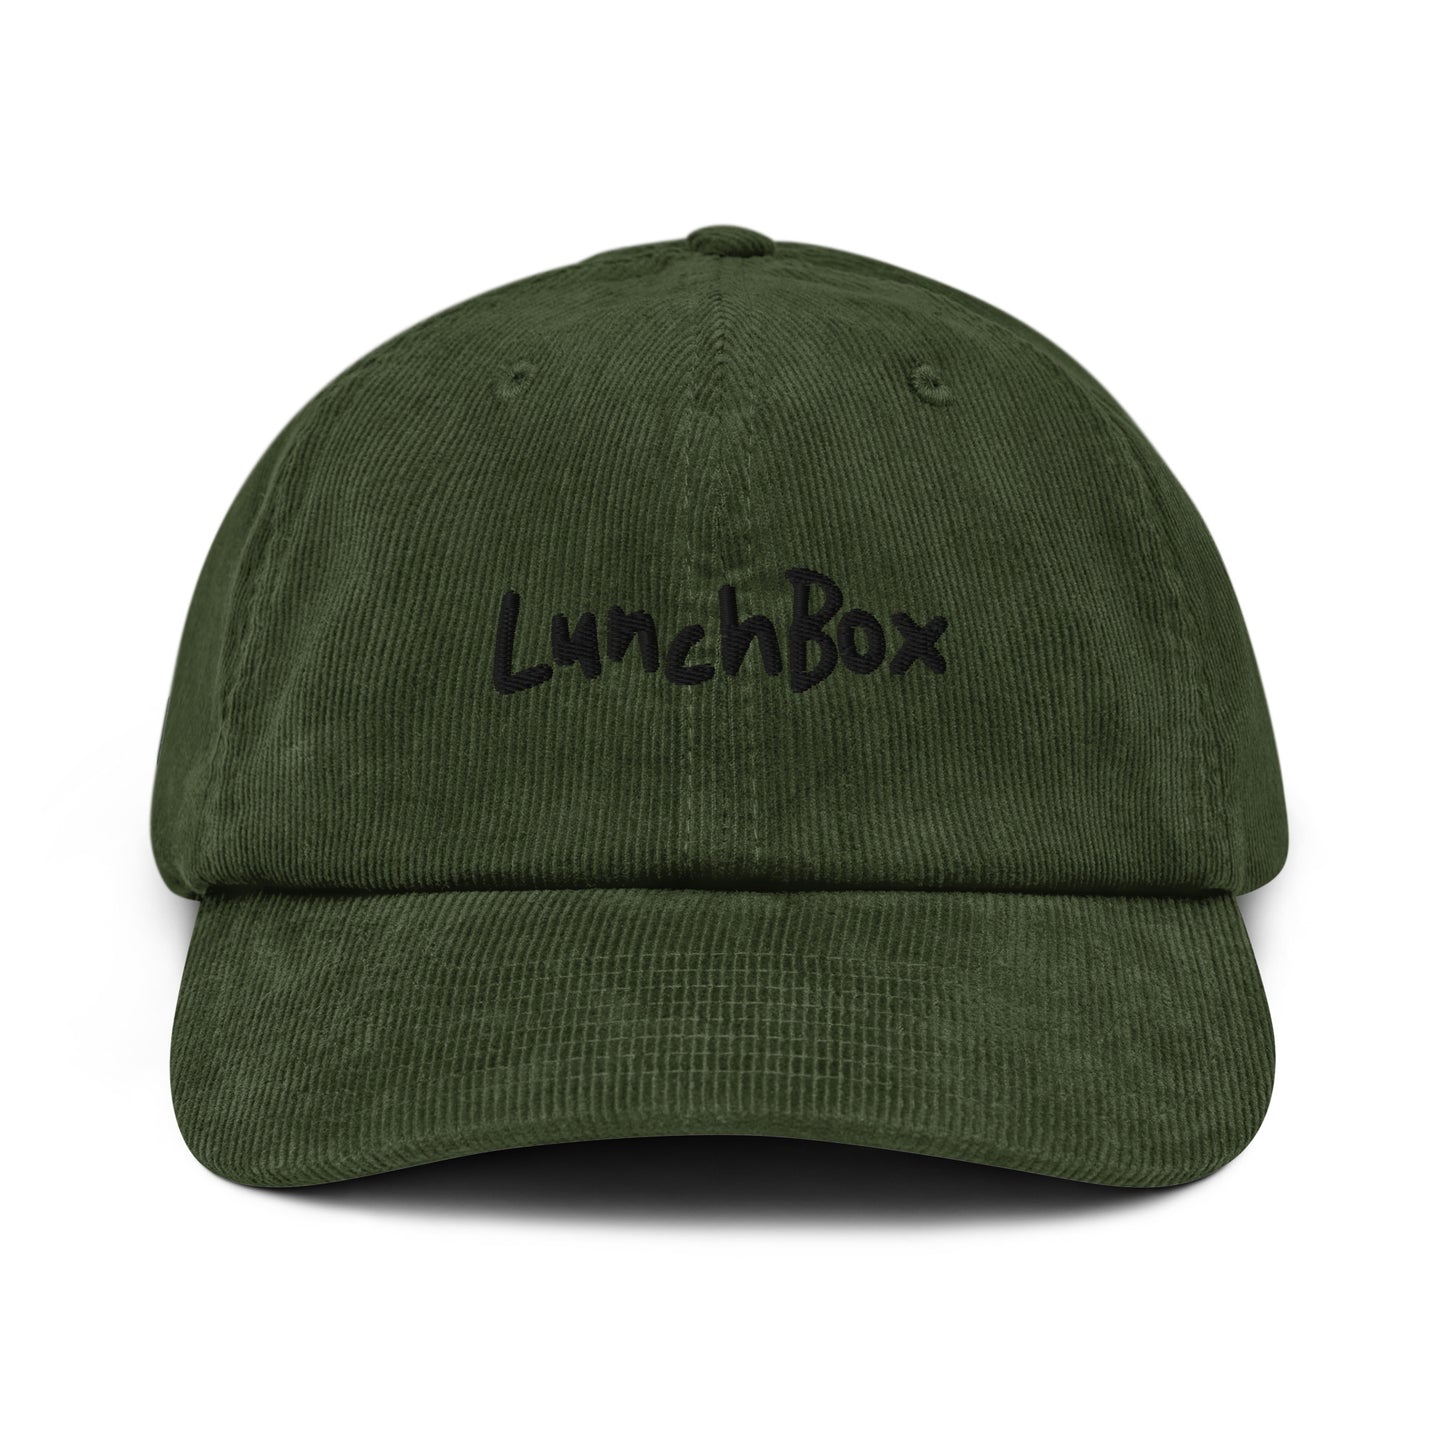 LunchBox Corduroy Hat